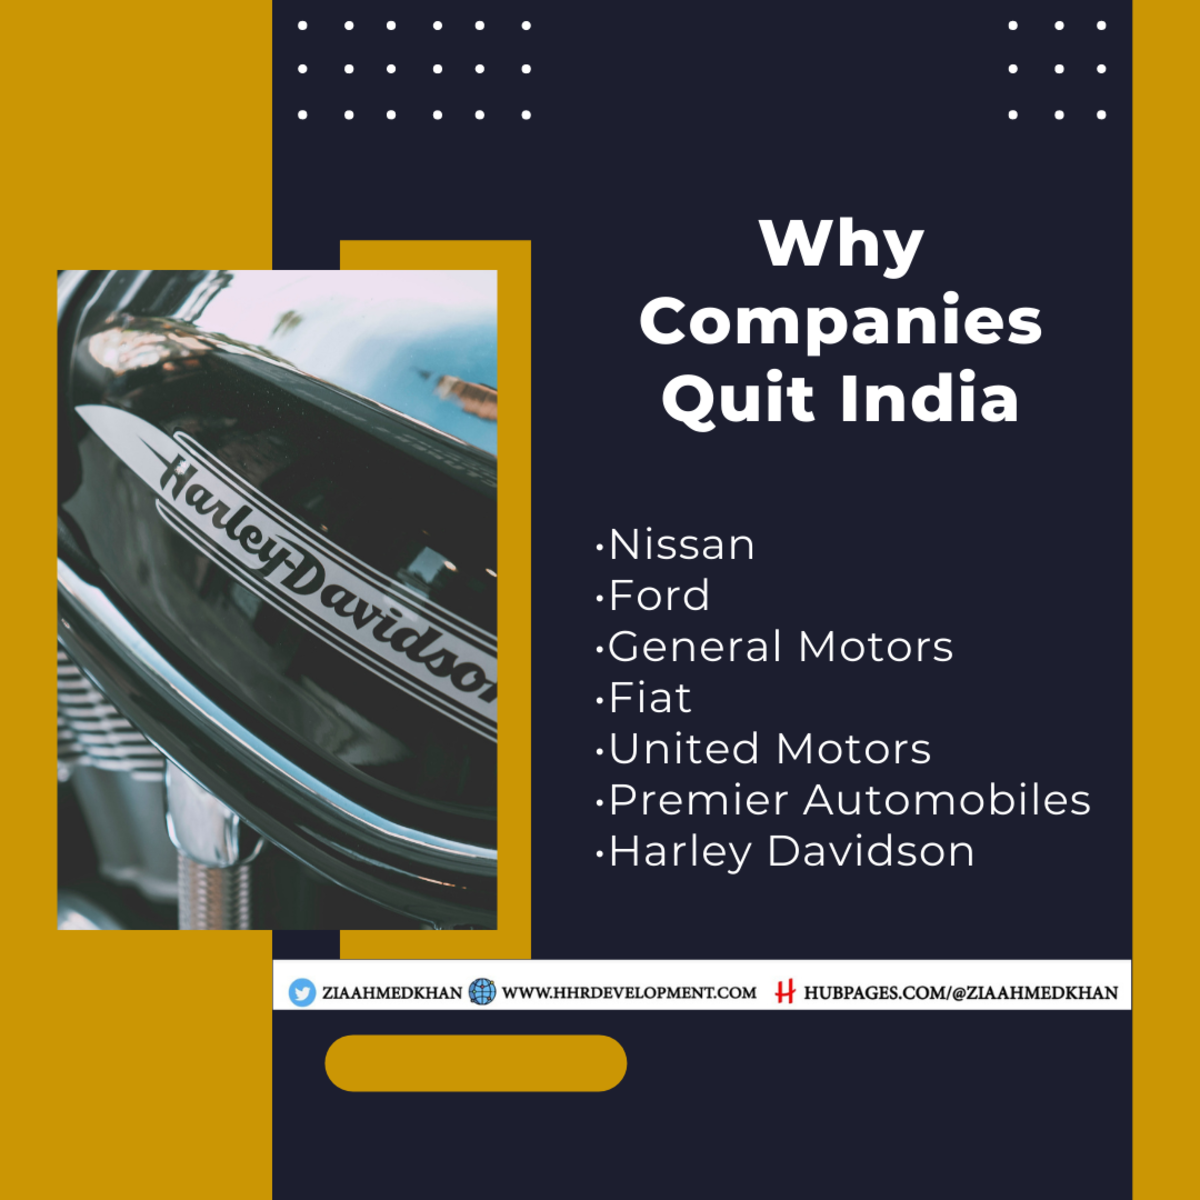 Companies Quitting India